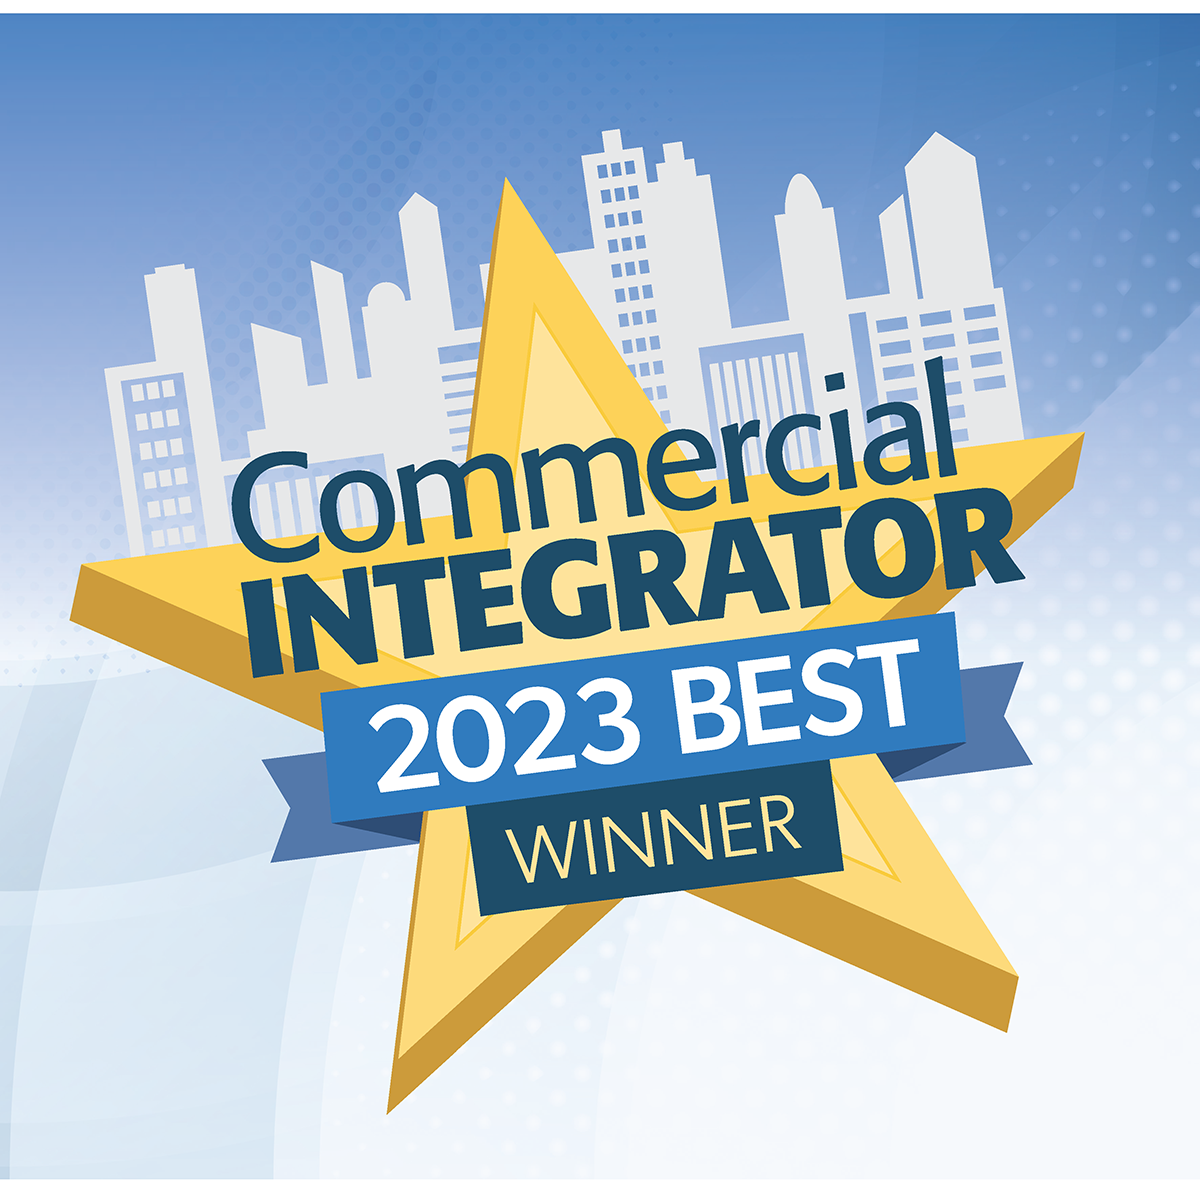 Commercial Integrator Best 